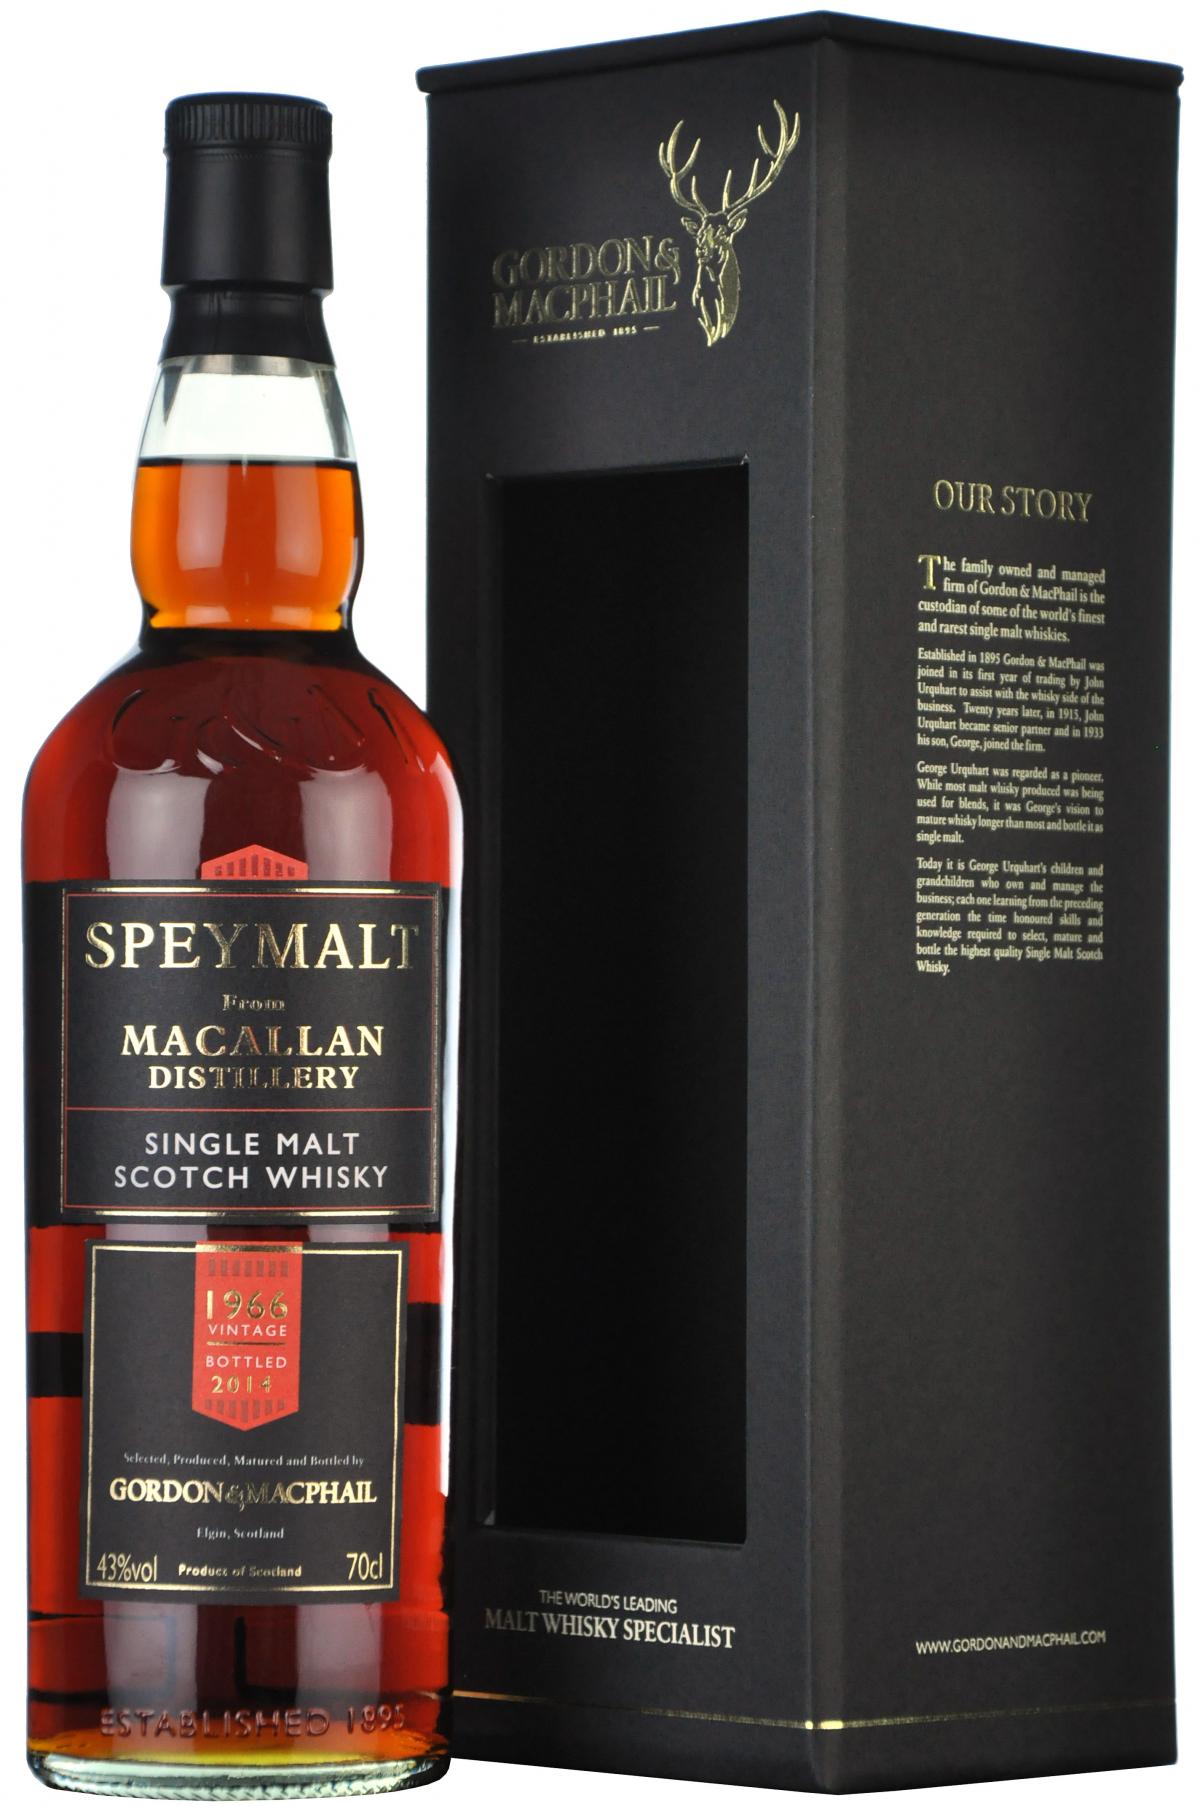 macallan 1966 bottled 2014 speymalt gordon and macphail